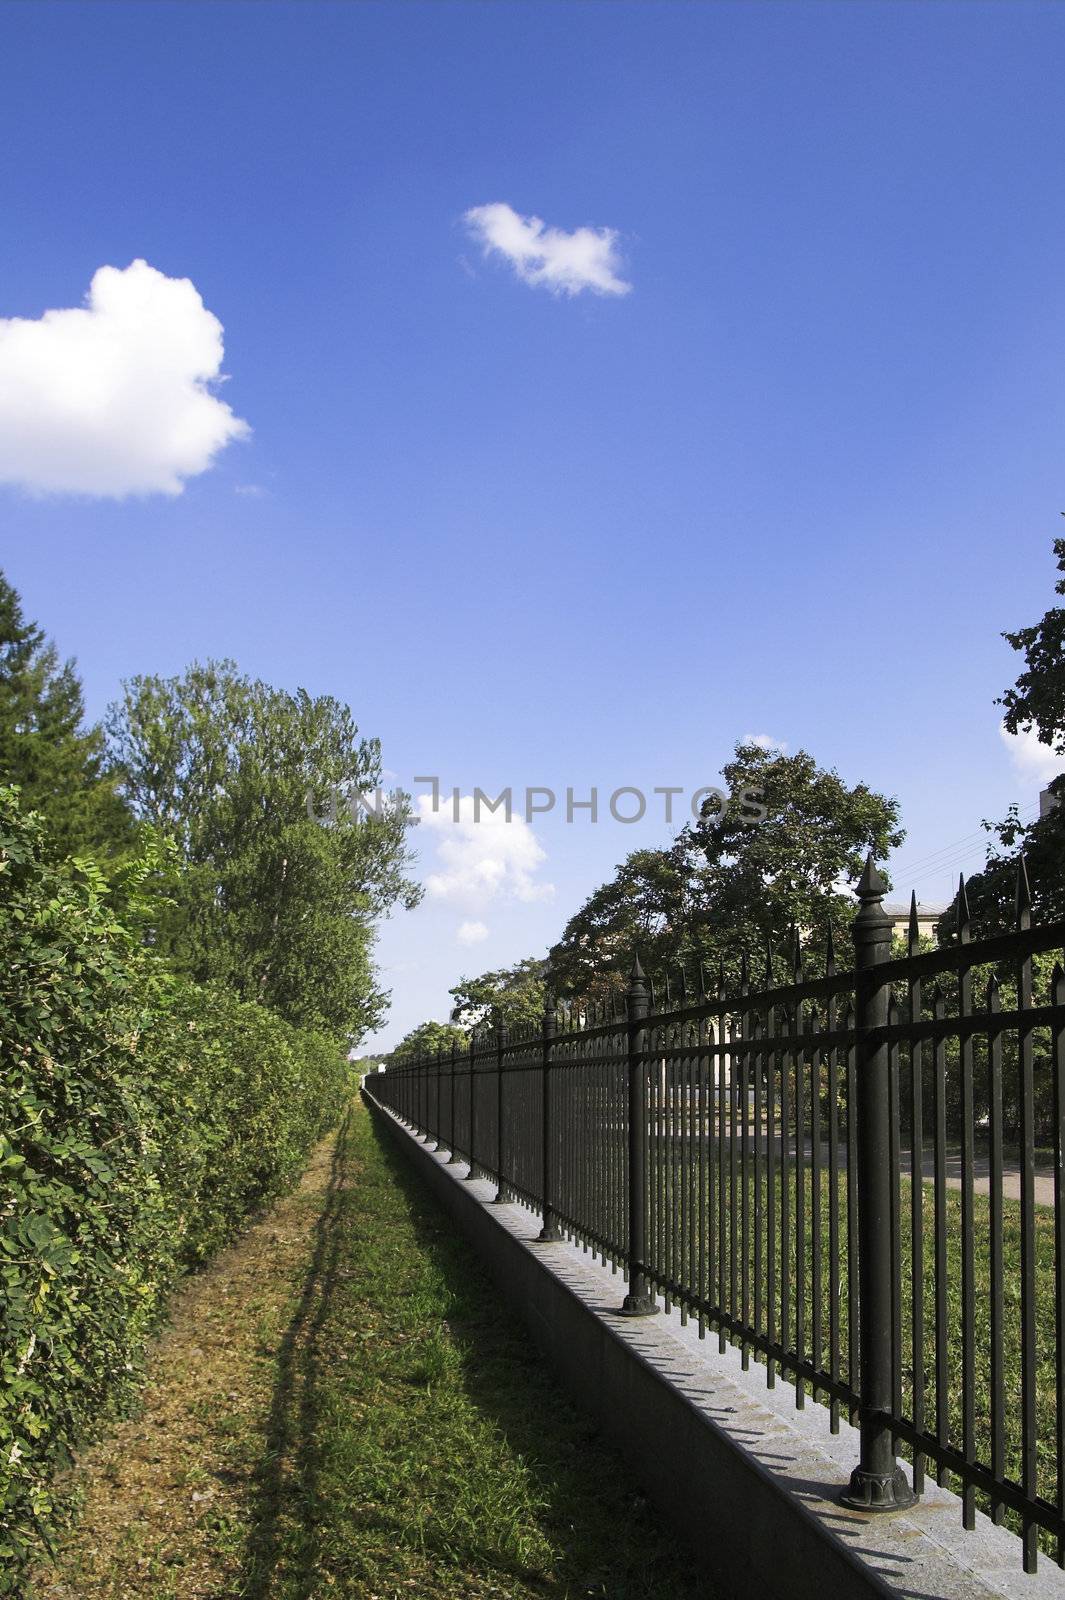 Iron Fence by simfan